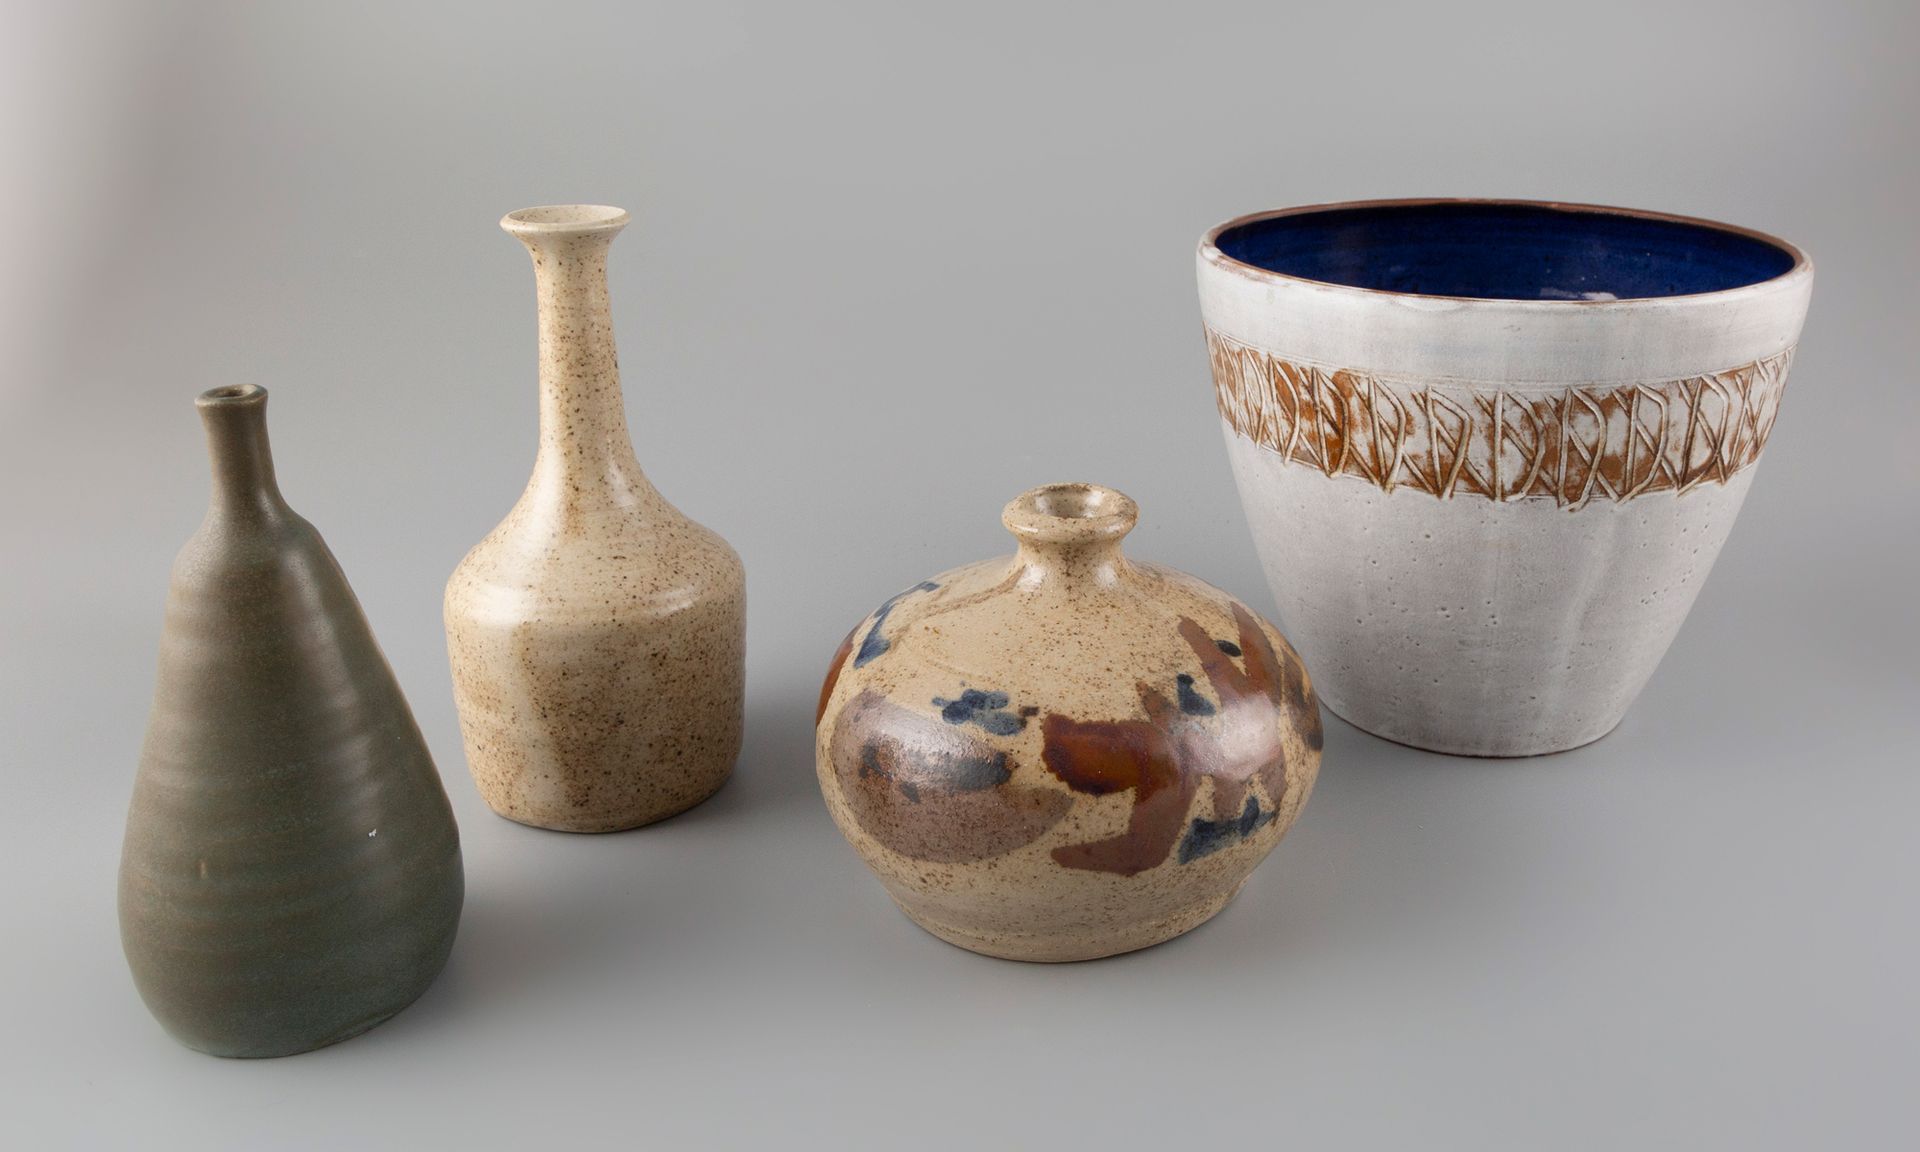 Null 收集了瓦劳里的Argonautes工作室的四个陶瓷，包括:
- 签署了一个炻器花瓶。高：17厘米
- 一个有装饰的炻器花瓶，署名。 
- 一个小花瓶，&hellip;